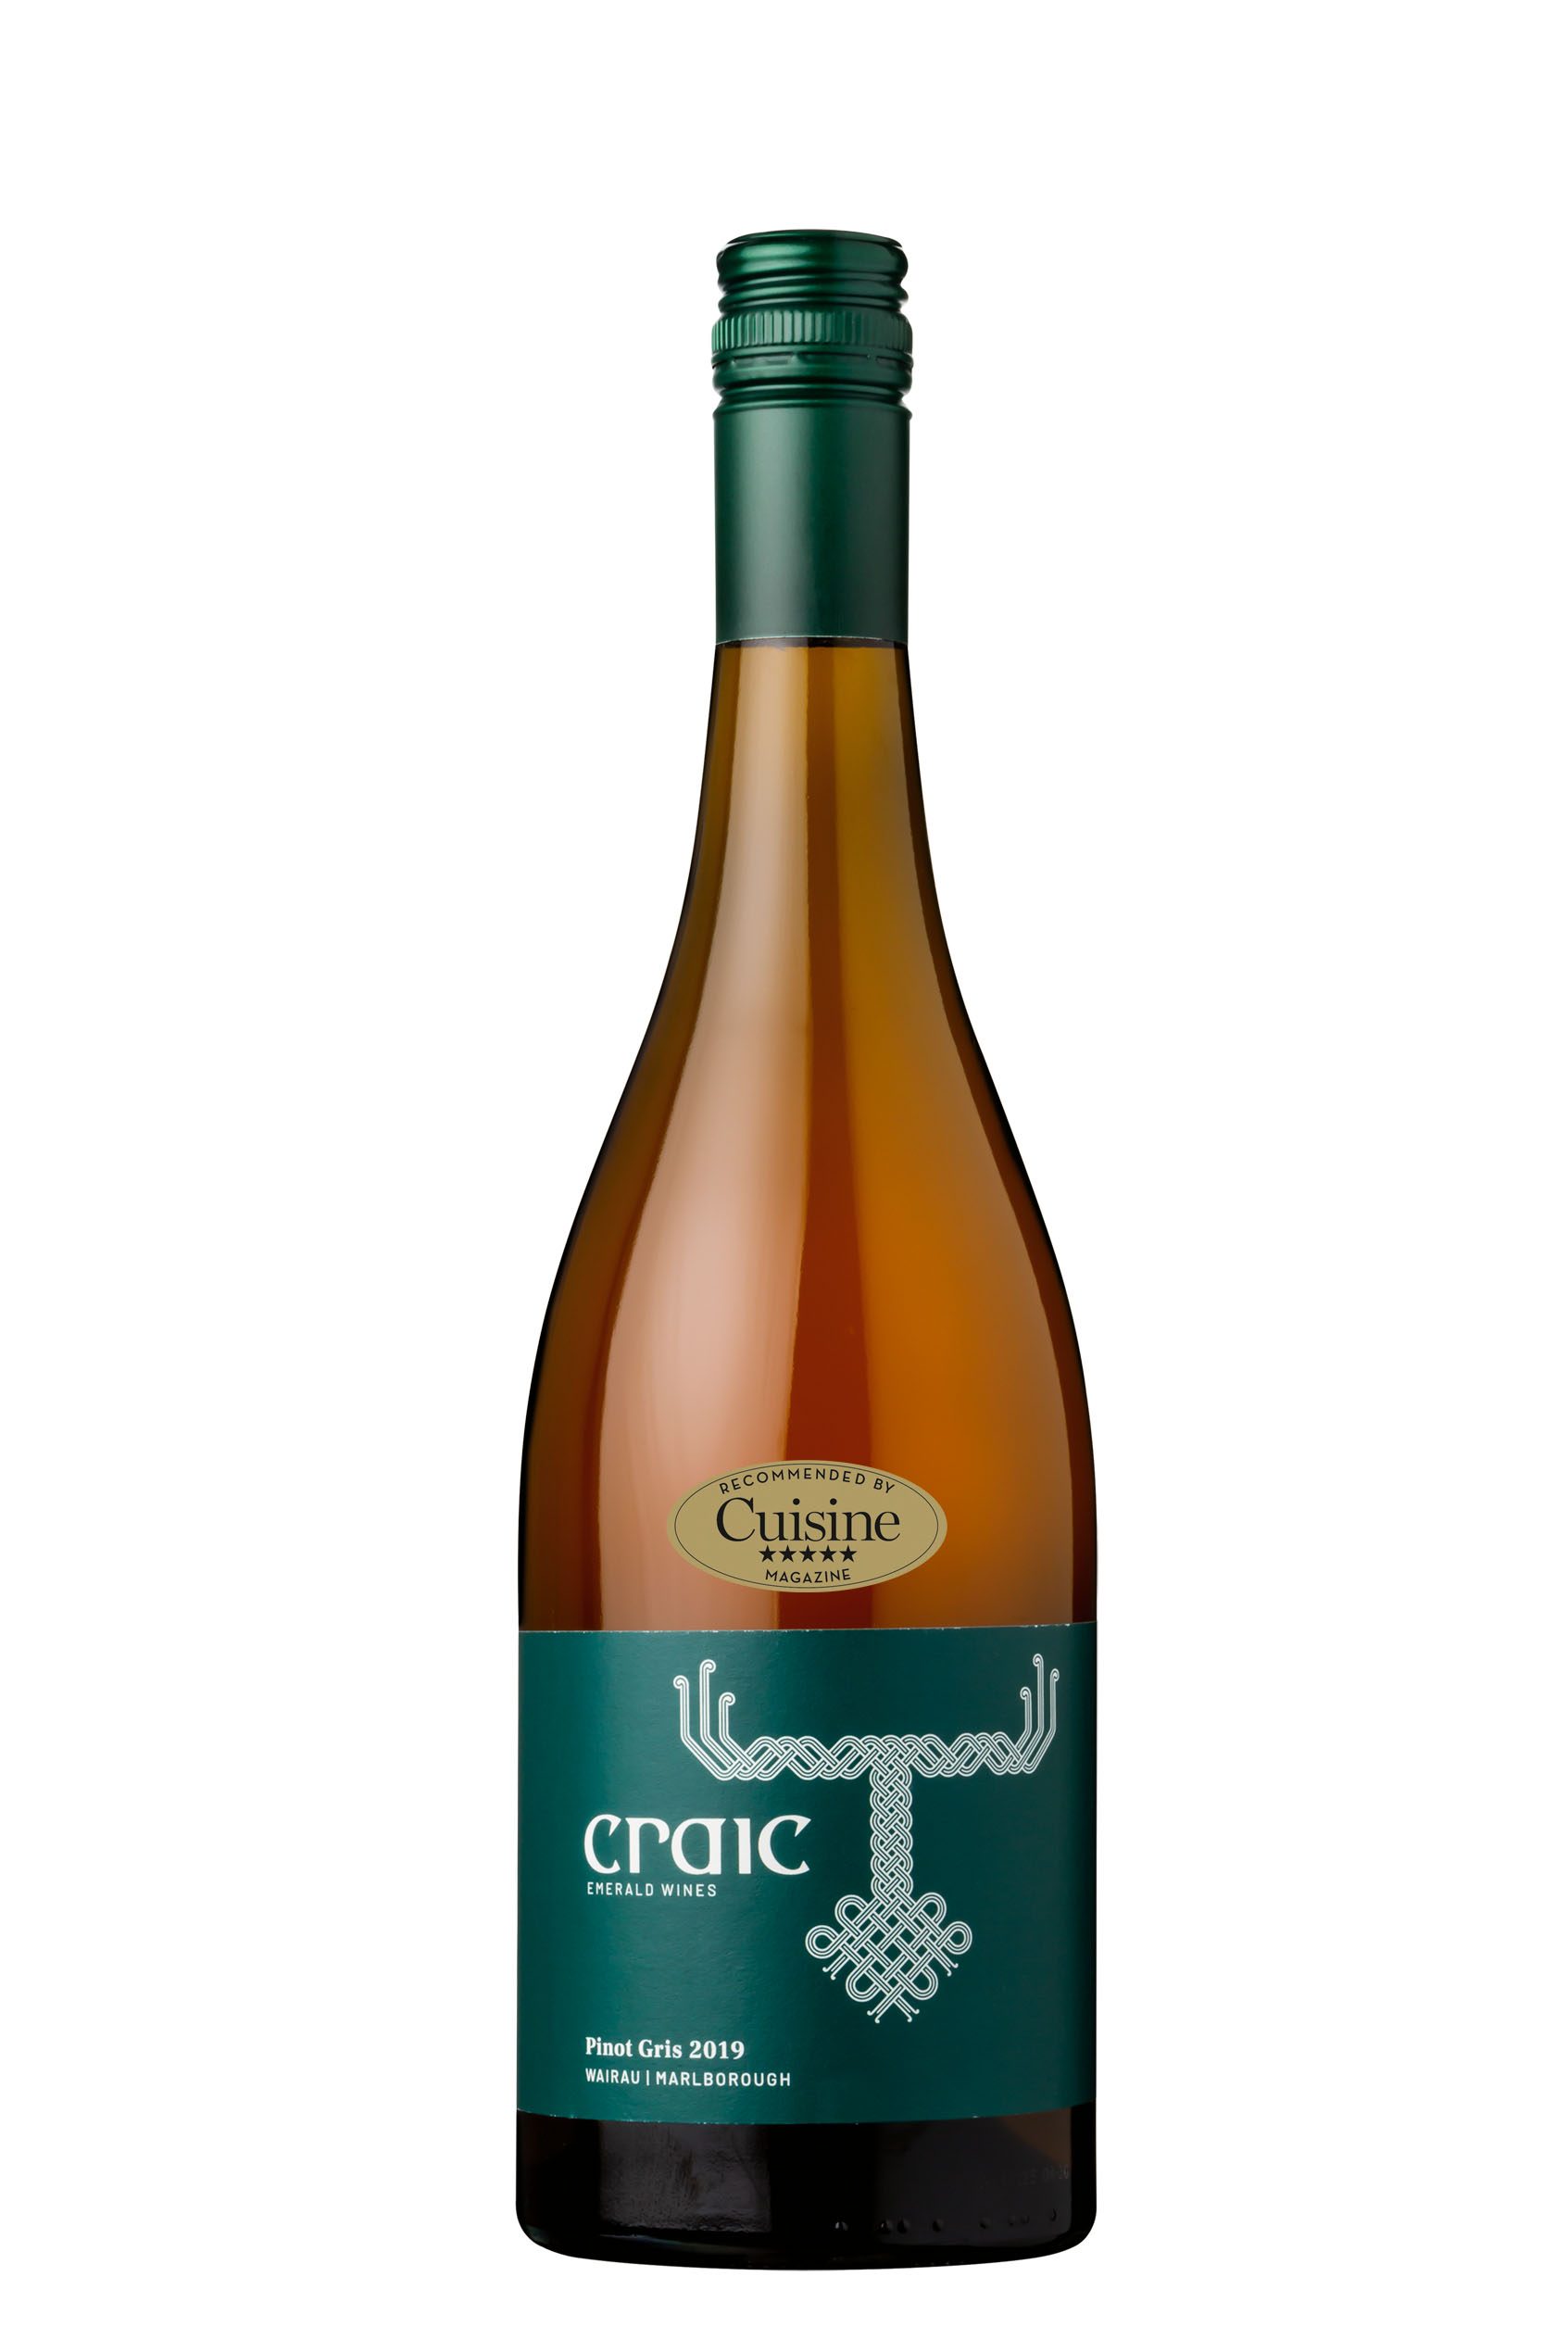 Craic by Emerald Wines Pinot Gris 2019 (Marlborough)